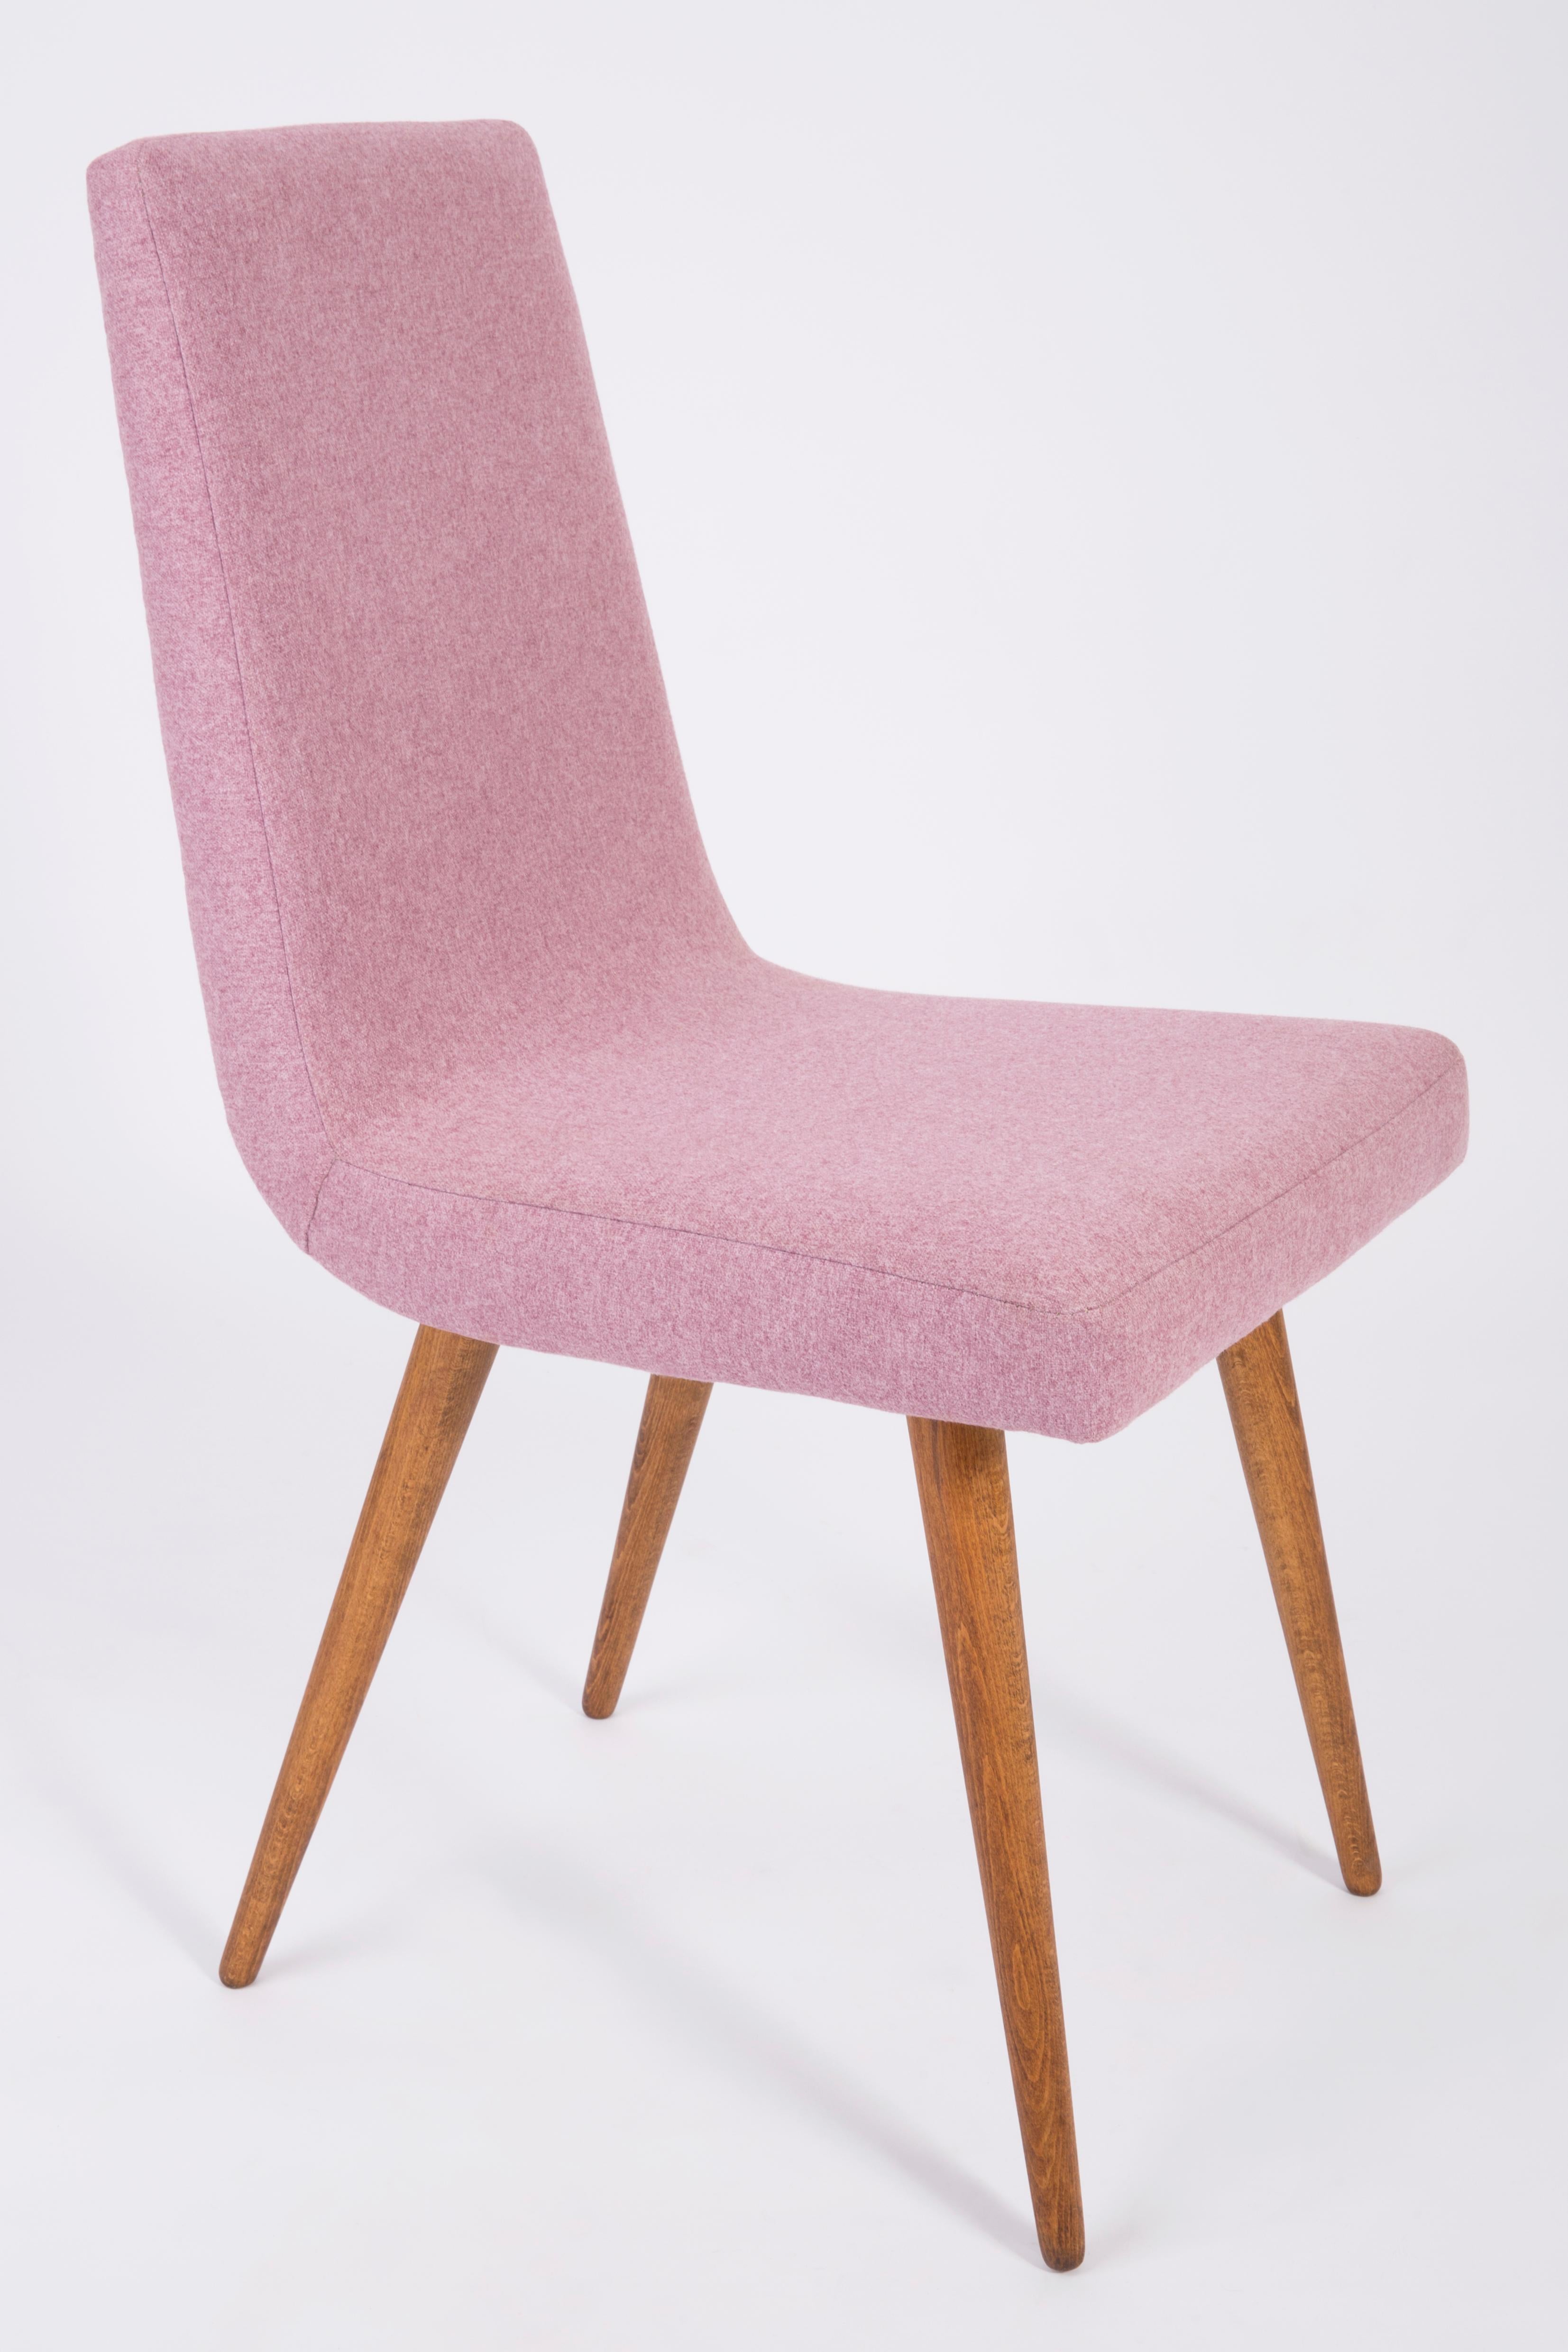 Set of Eight 20th Century Pink Mélange Rajmund Halas Chairs, 1960s For Sale 4